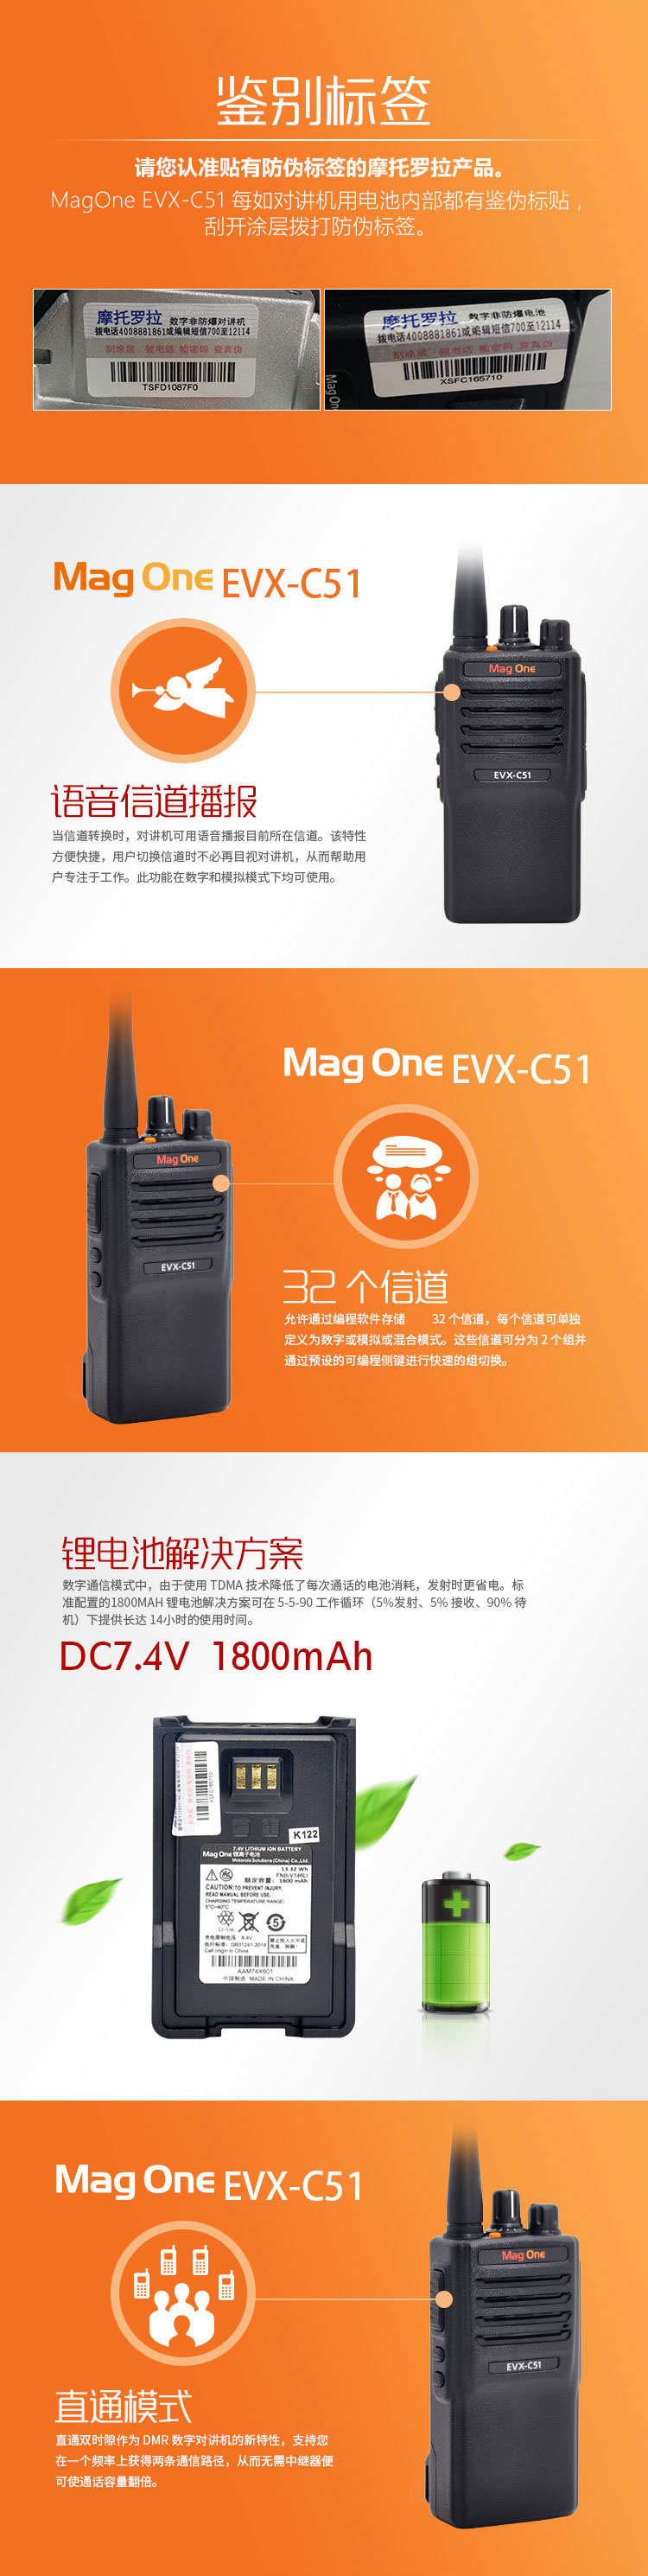 MAG ONE EVX-C51数字便携式对讲机